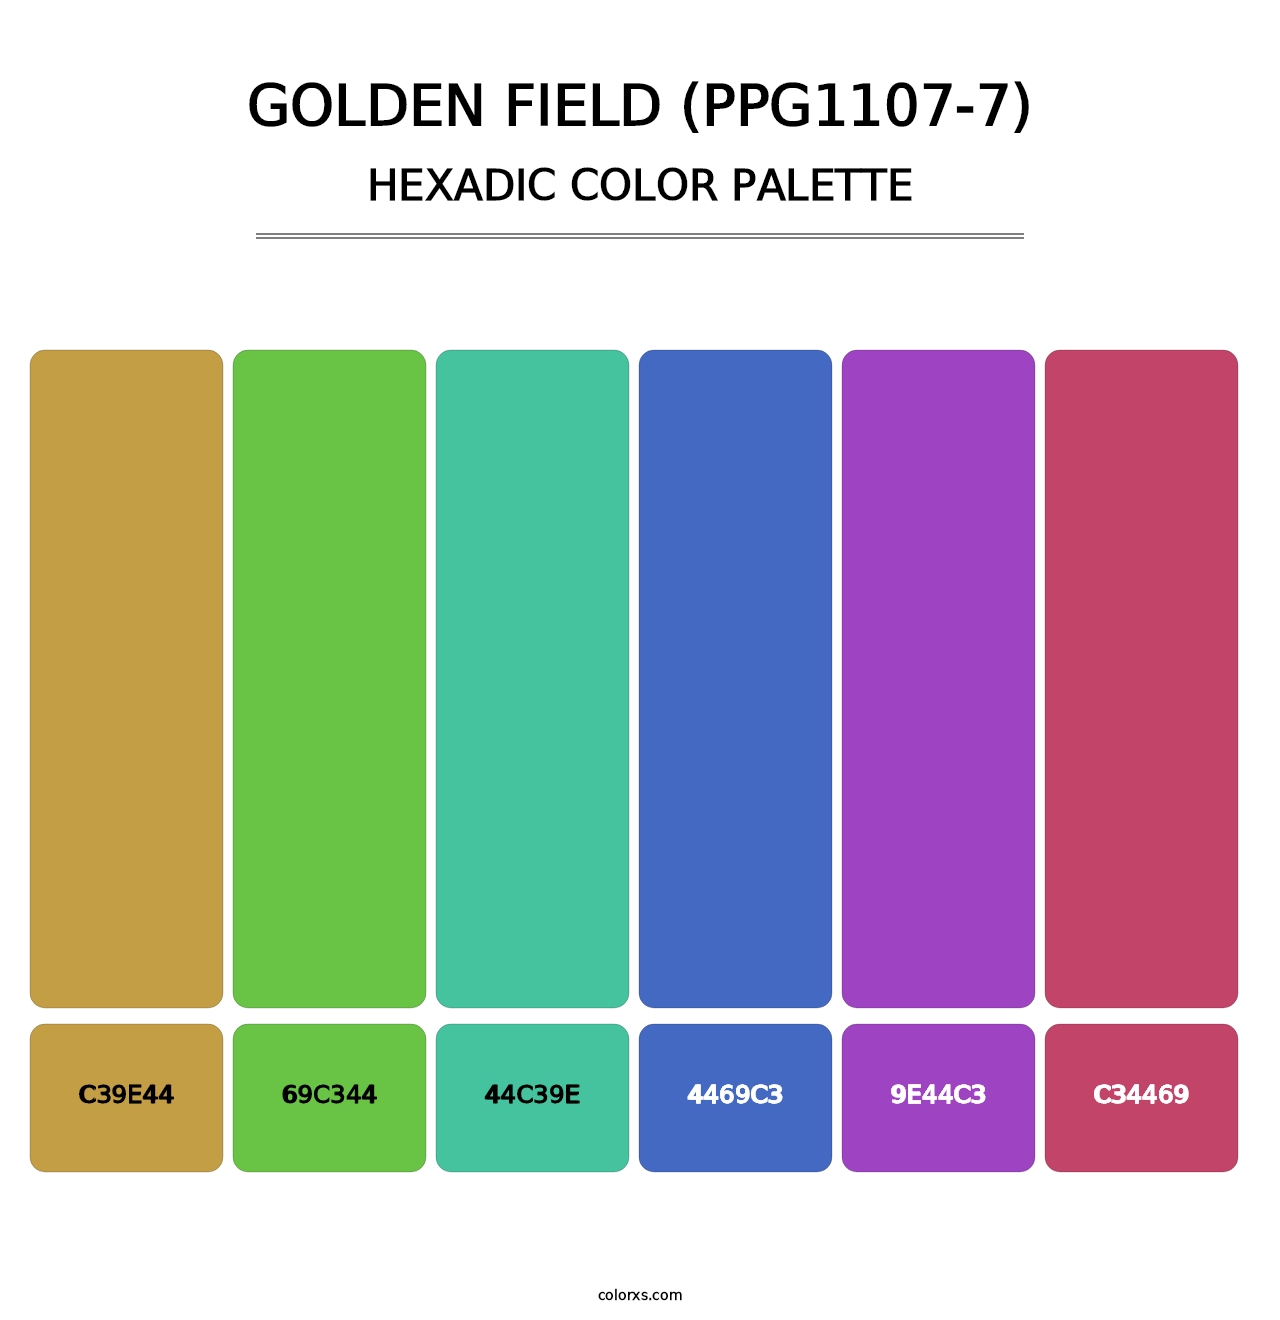 Golden Field (PPG1107-7) - Hexadic Color Palette